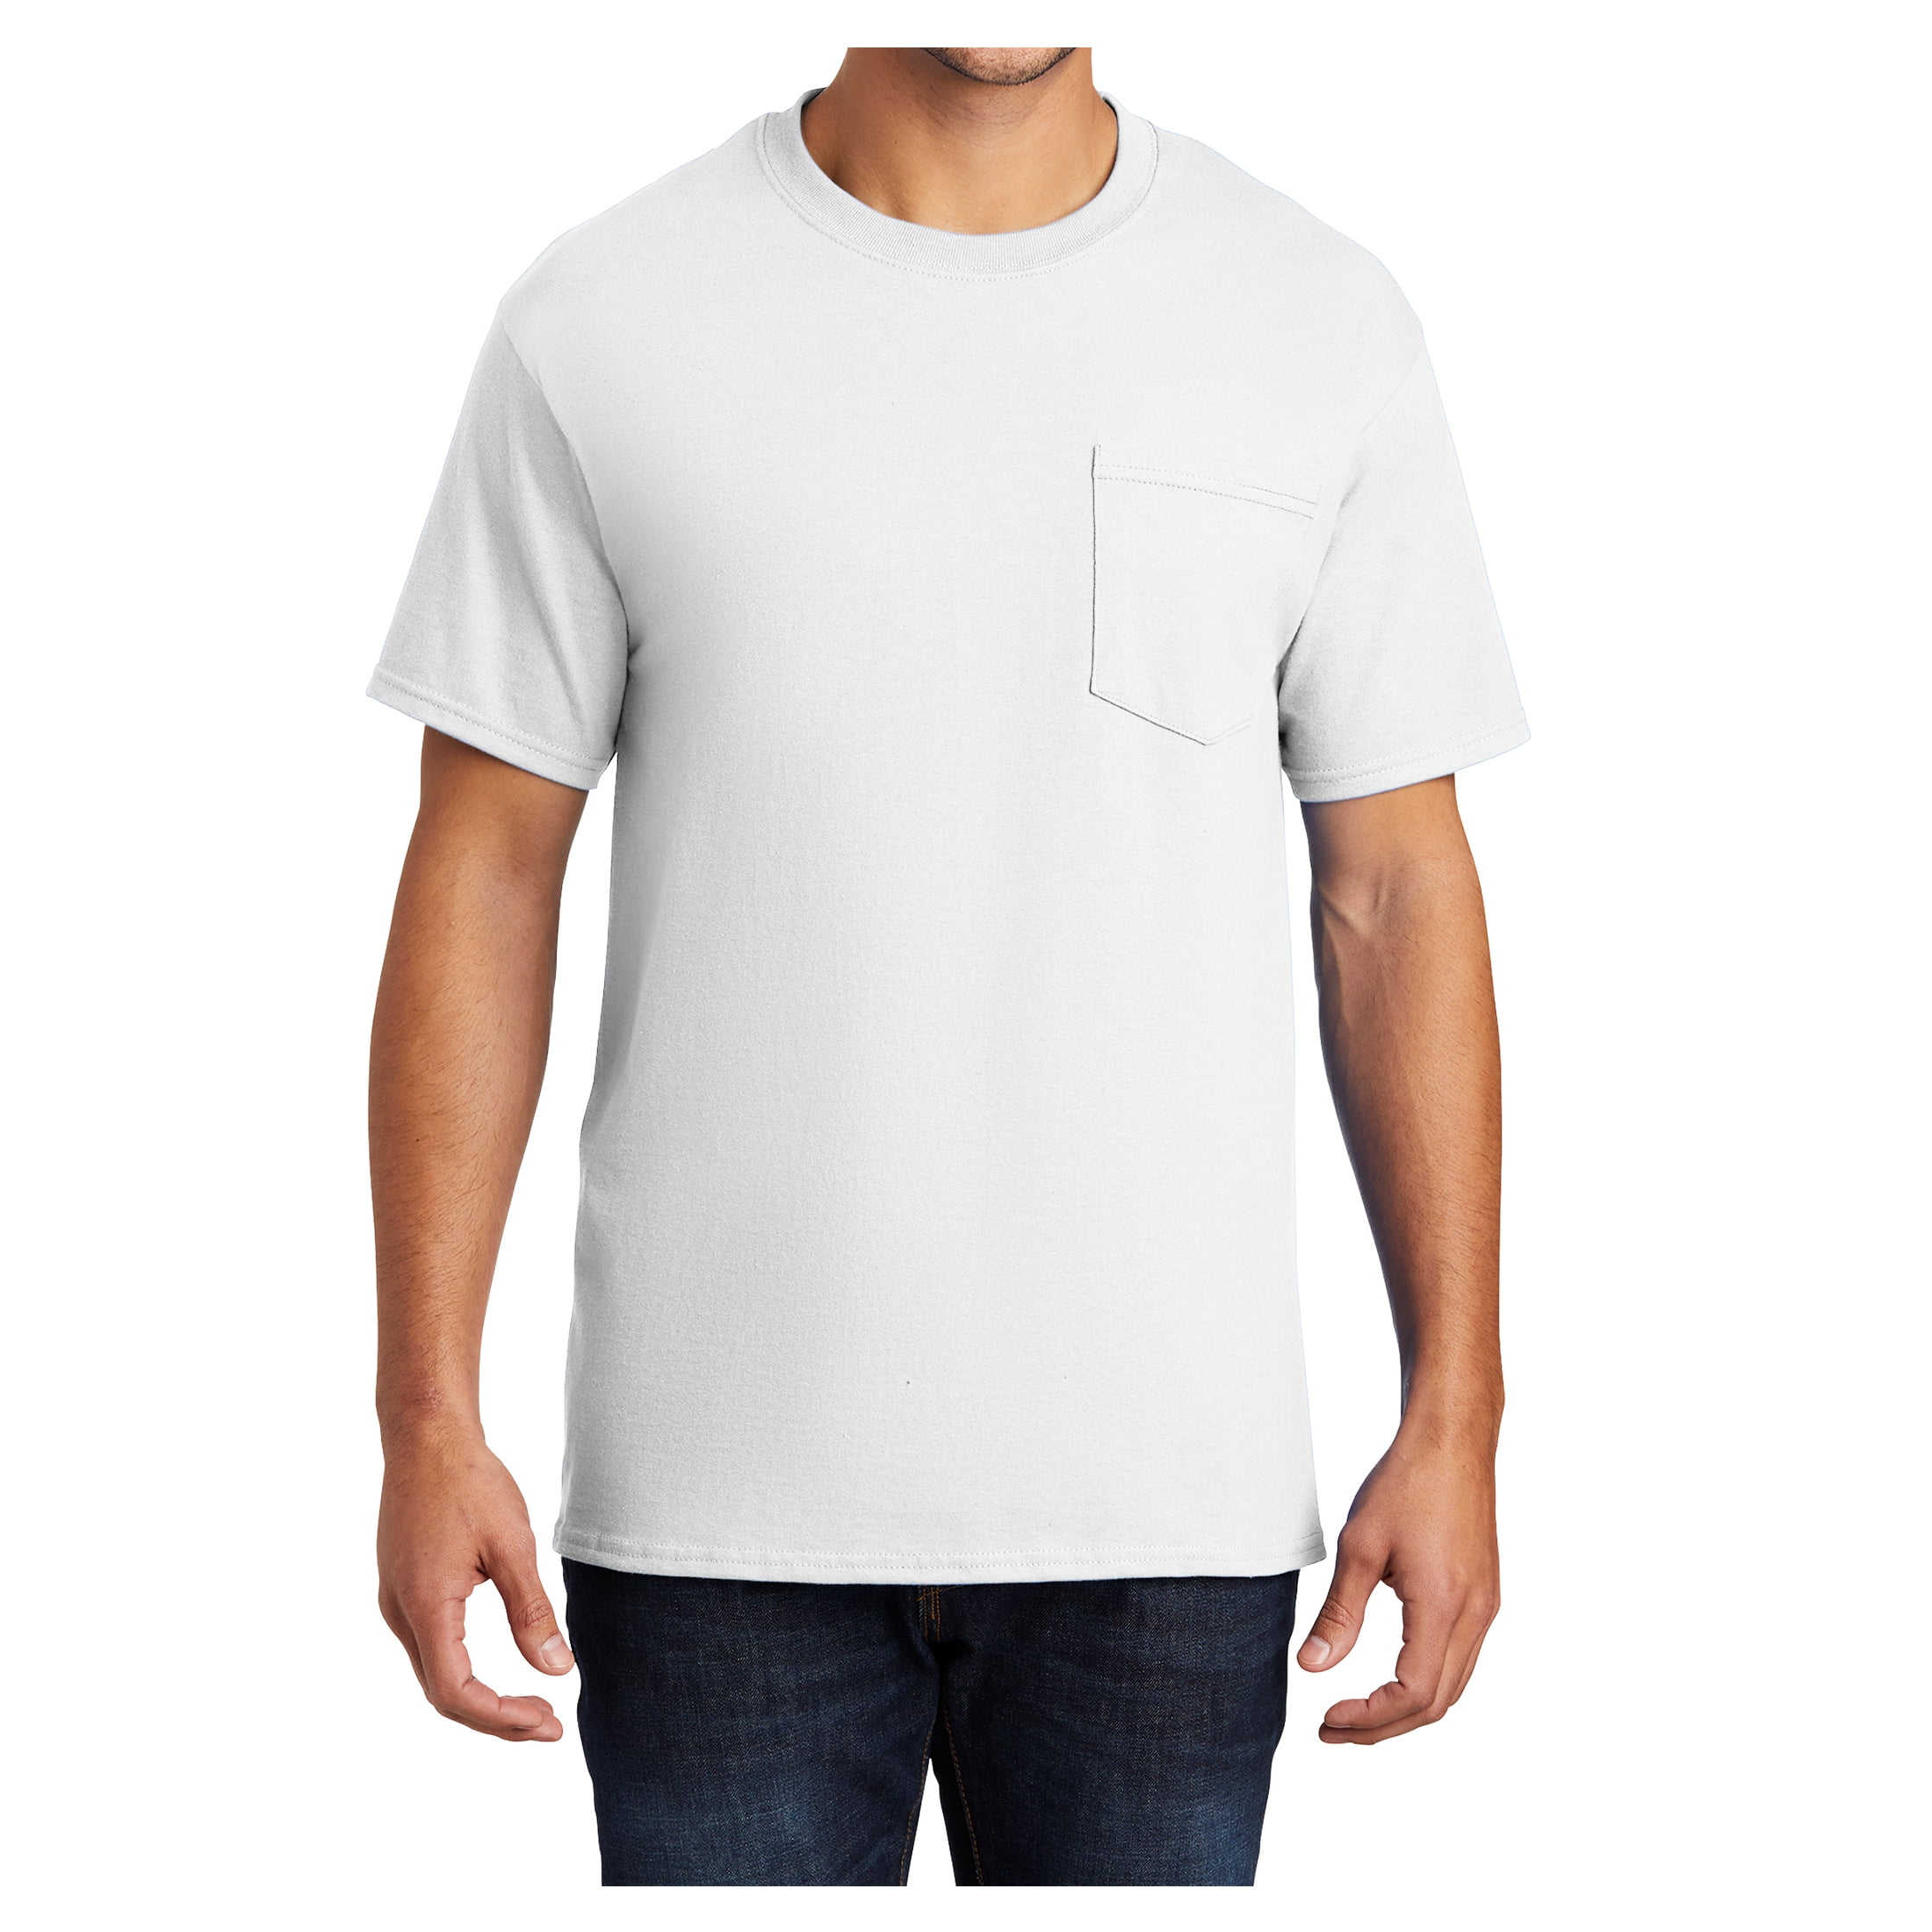 Kids Boys Girls SoftSpun Crew Neck Casual Short Sleeve 100% Cotton T-Shirt Top 